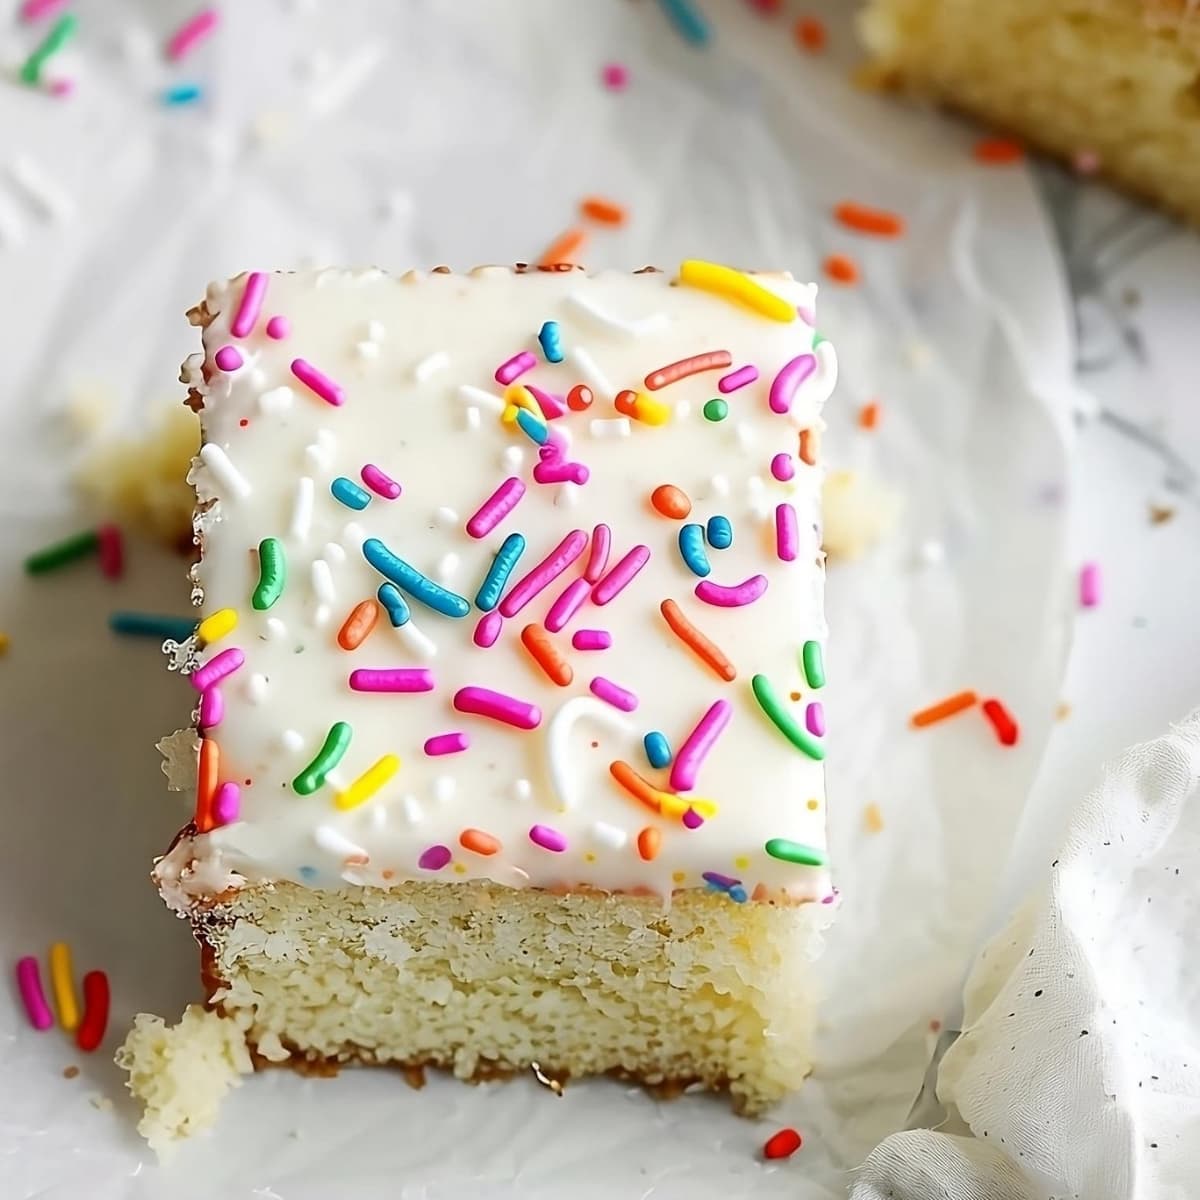 Square slice of vanilla sheet cake with sprinkles.